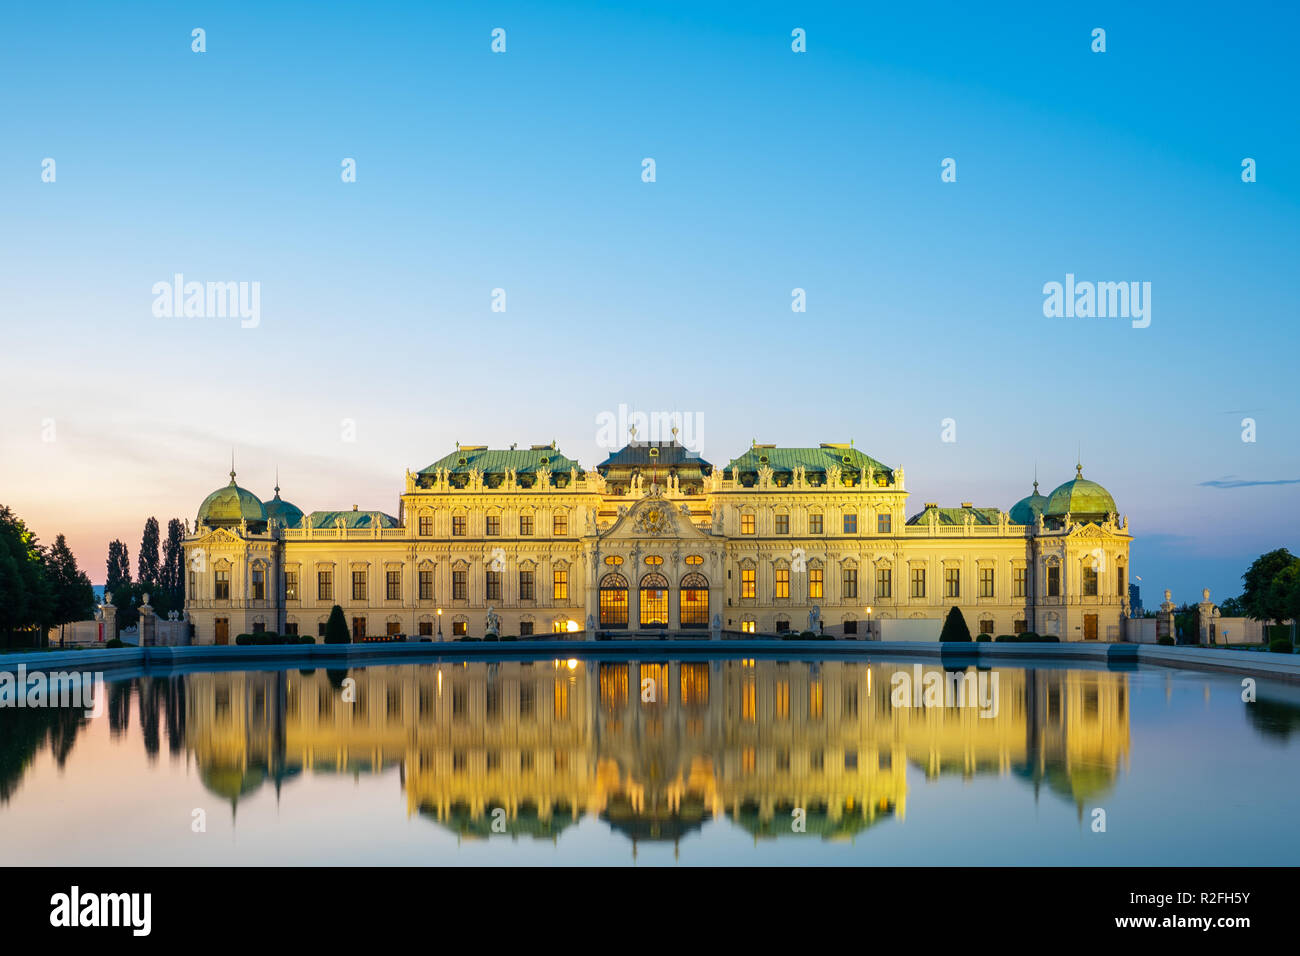 Vienna, Austria - May 12, 2018: Belvedere Palace at night in Vienna city, Austria. Stock Photo